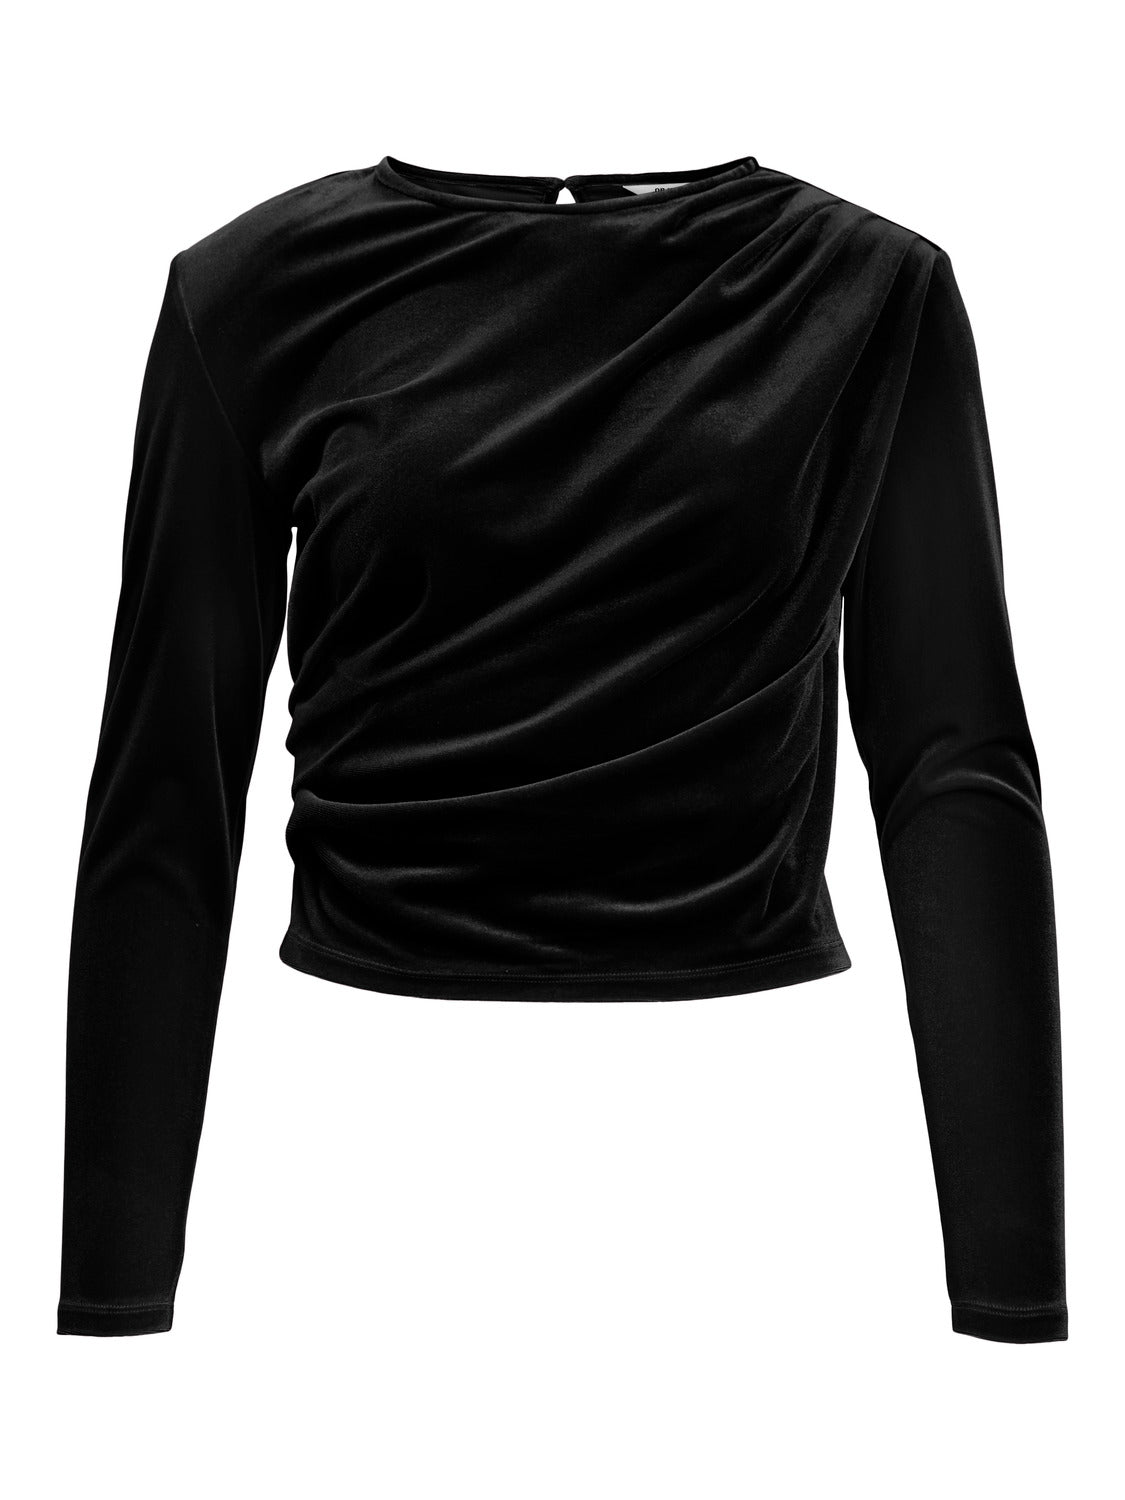 OBJALONA T-shirts & Tops - Black